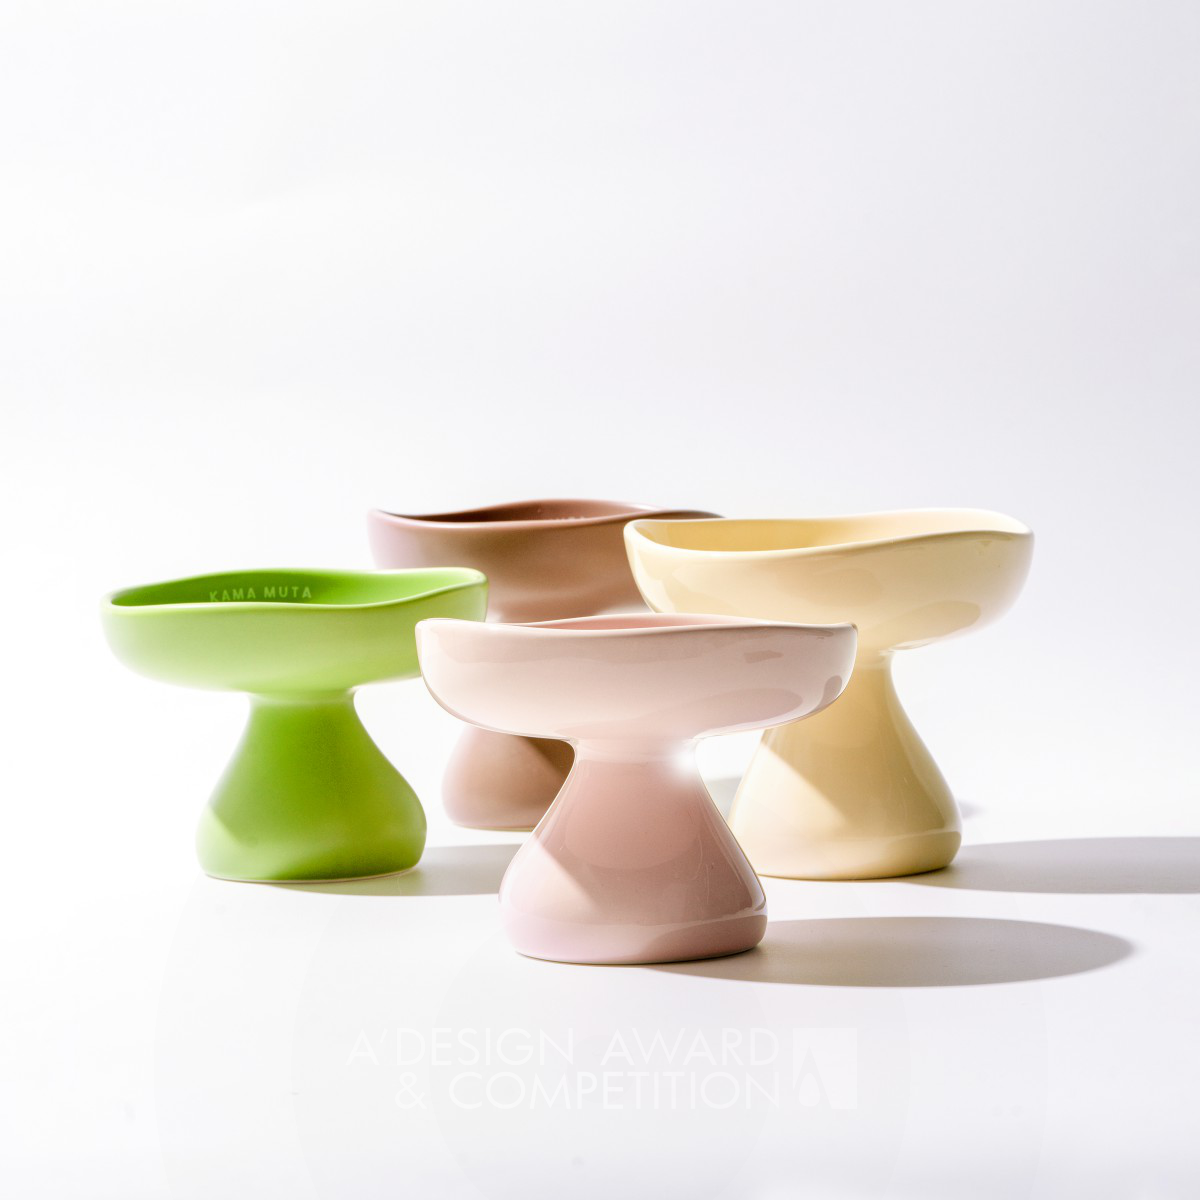 Mushroom Pet Bowl by Chen Liang